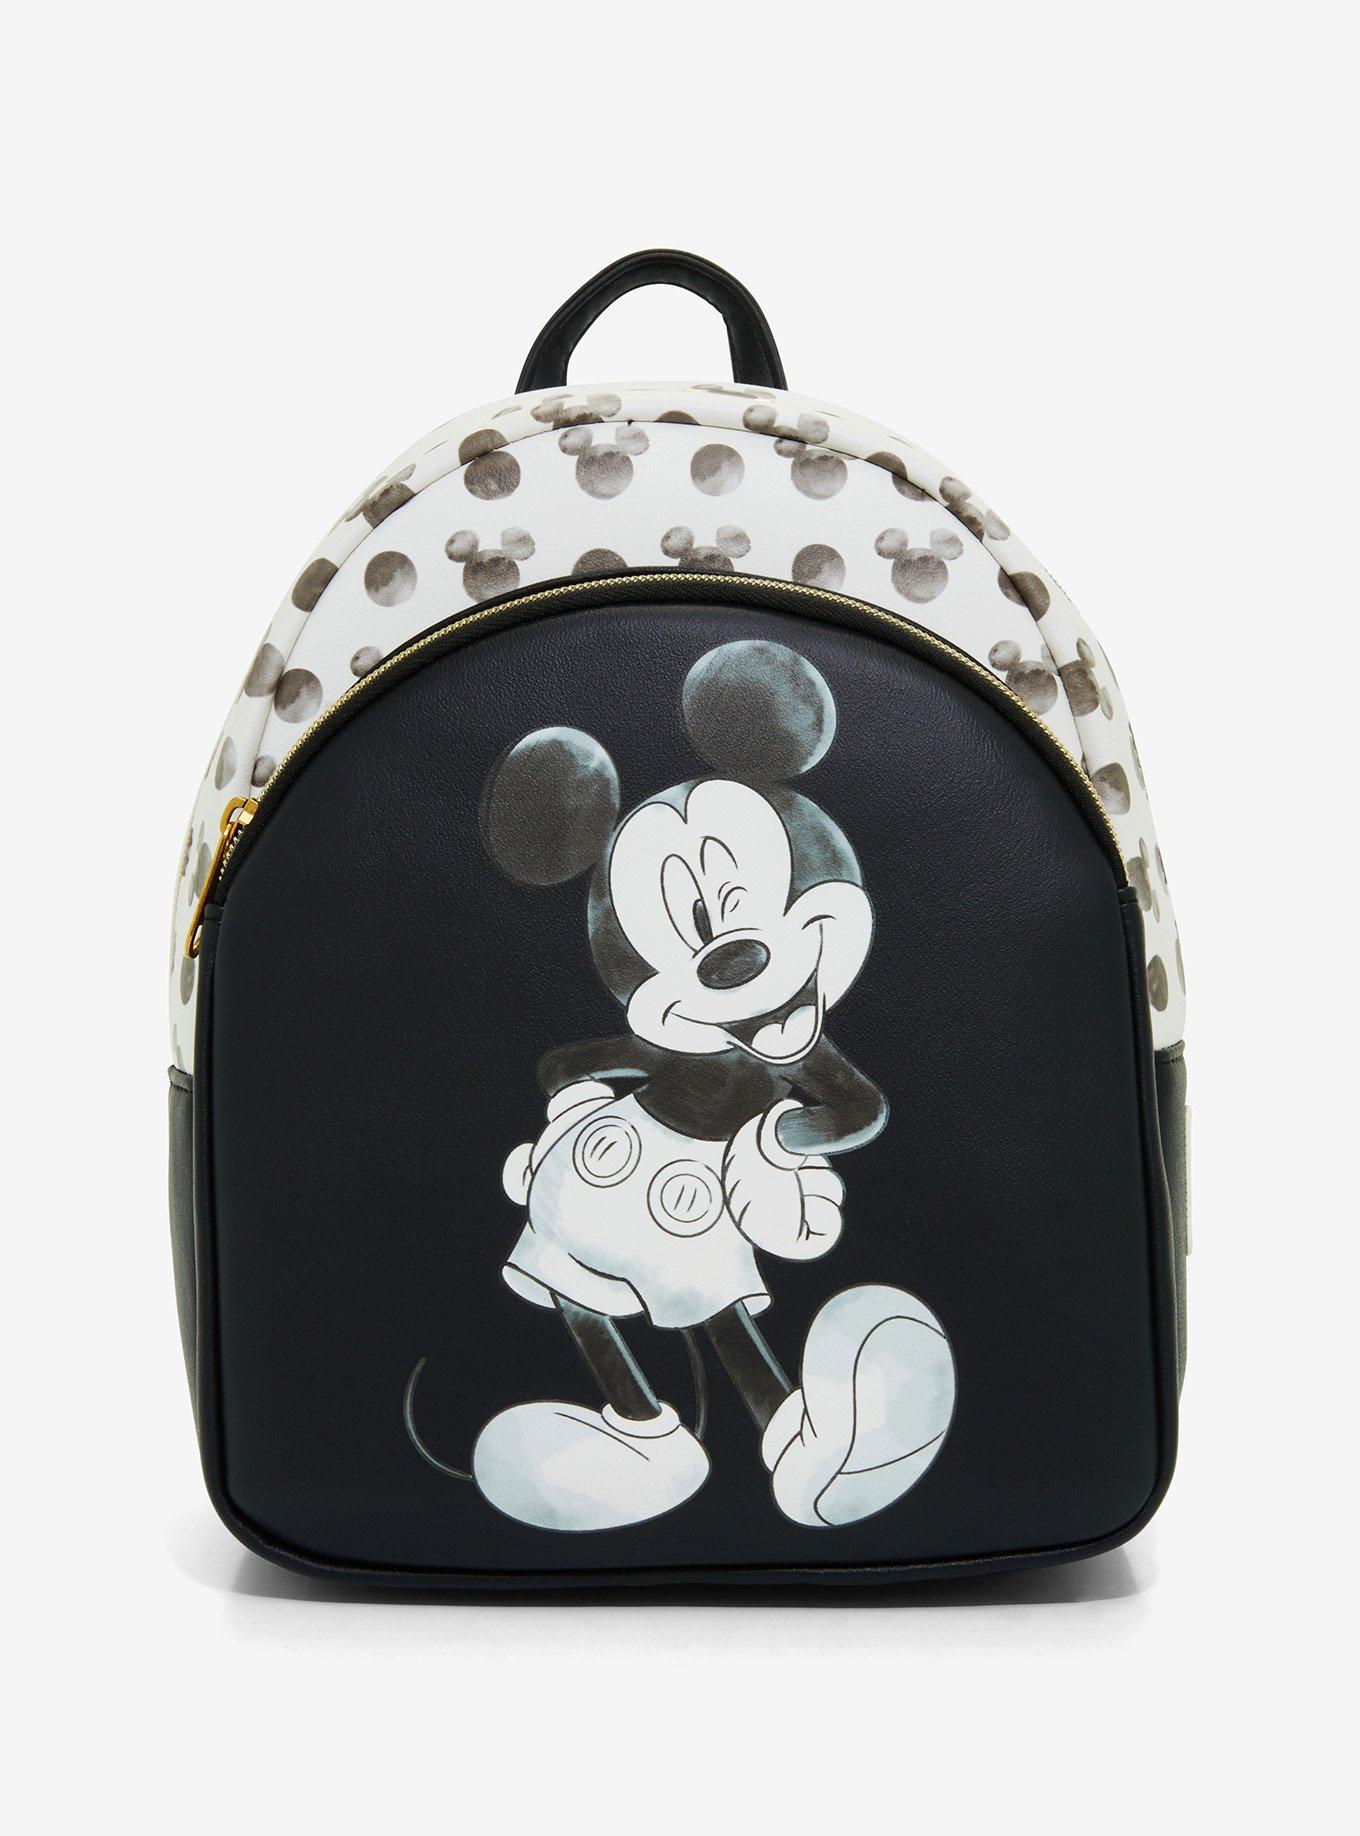 Mickey Mouse Helpful Elf Disney Bag Charm - Mickey Mouse Helpful